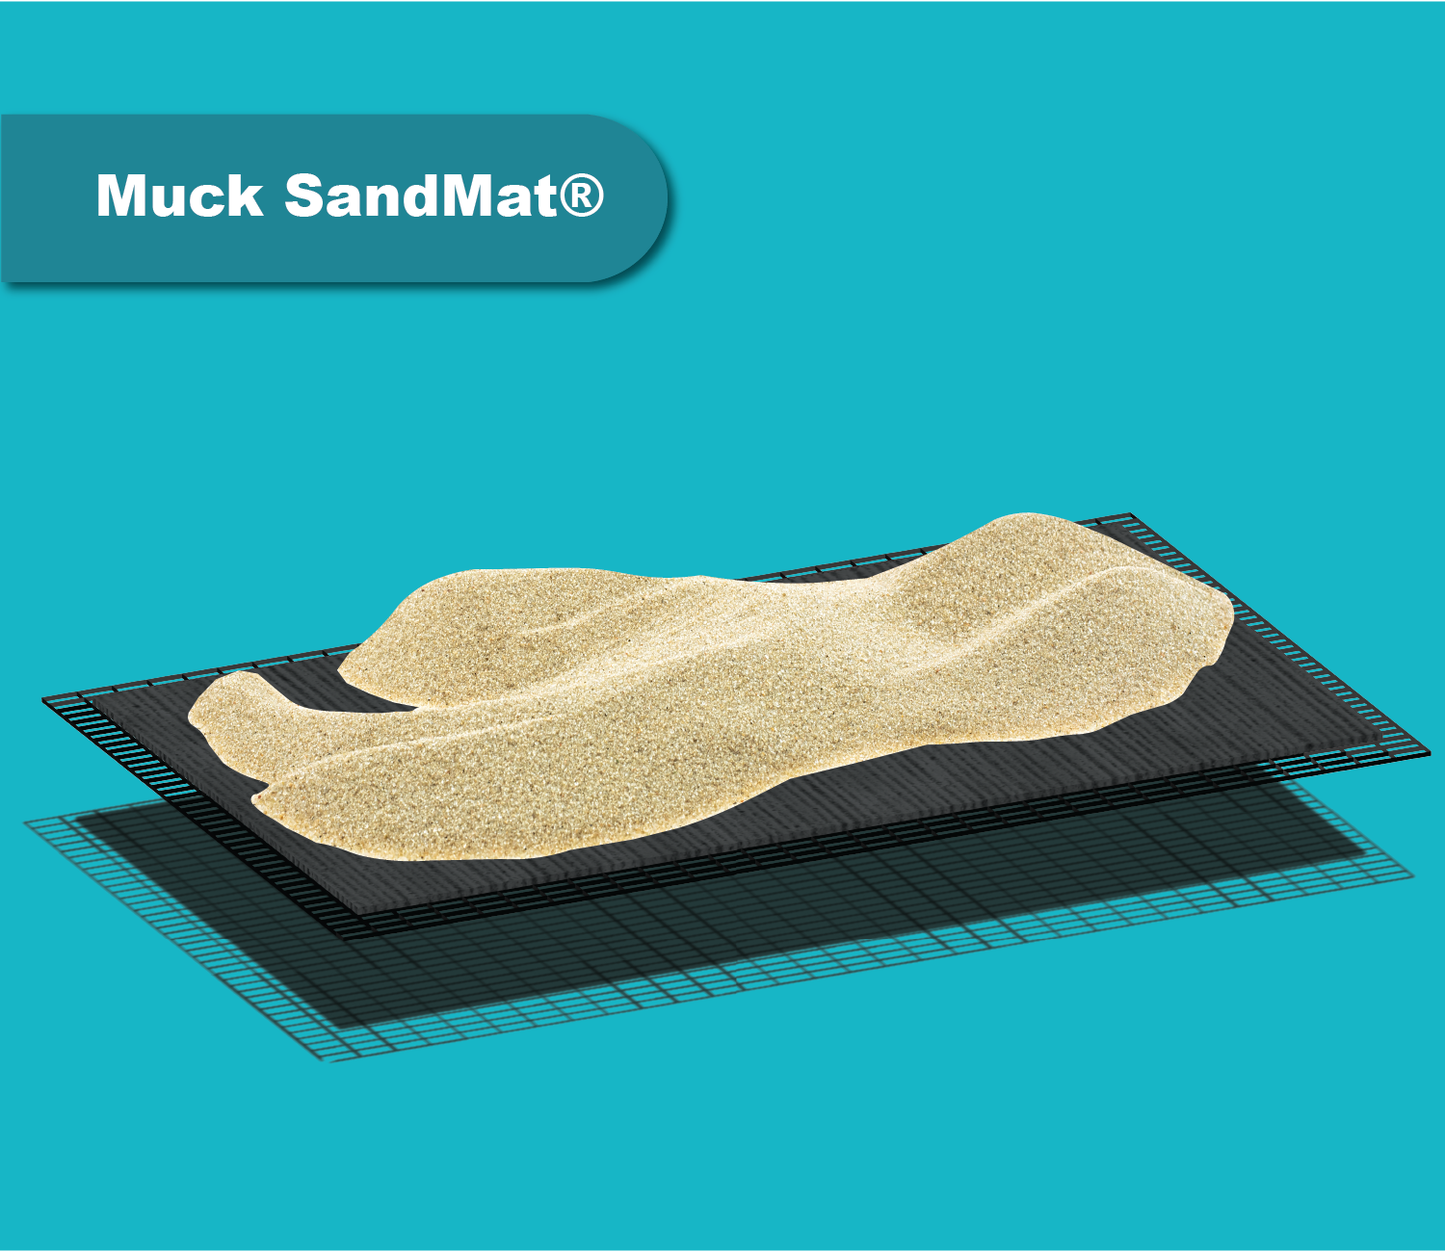 Muck SandMat